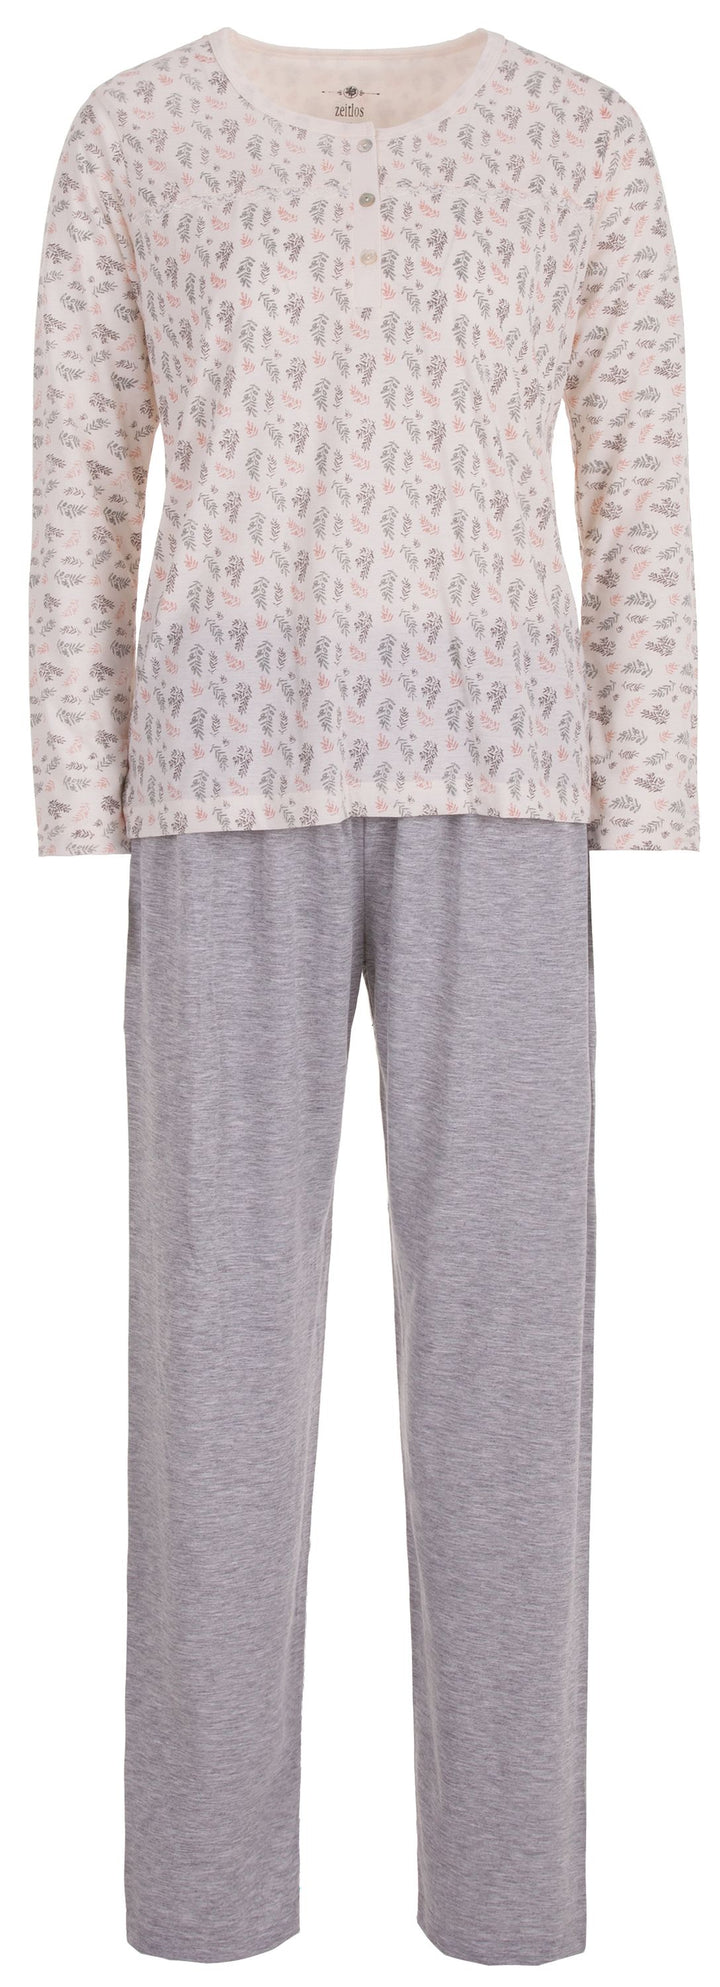 Pajama Set Long Sleeve - Twigs